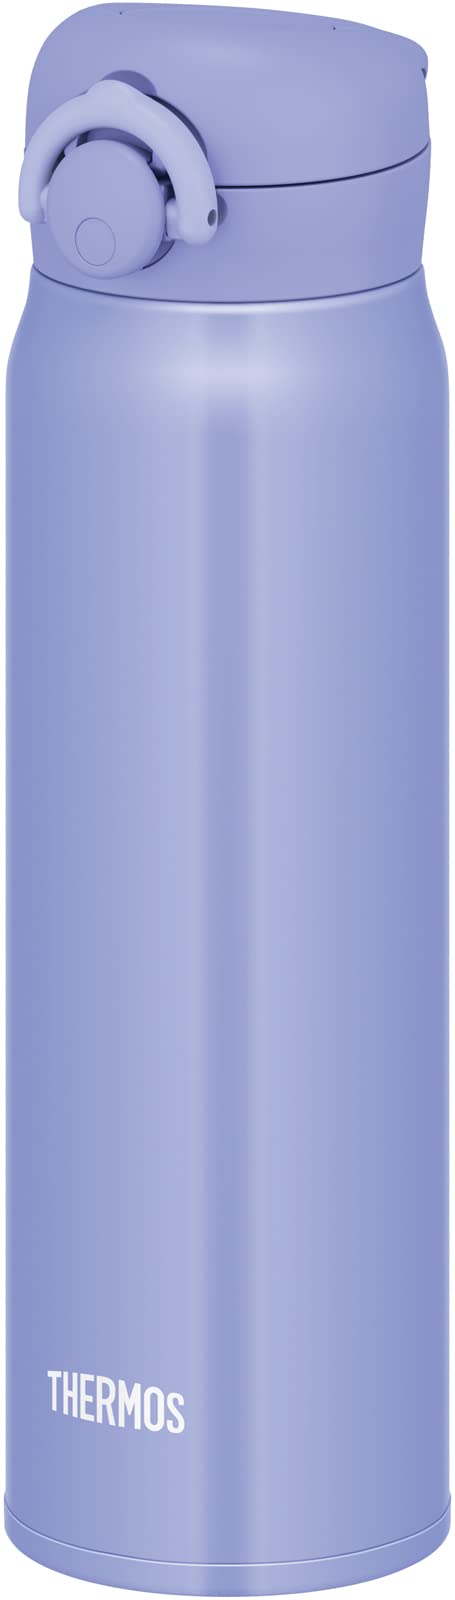 THERMOS 真空断熱ケータイマグ 0.6L （ブルーパープル）JNR-603 BL-PL 水筒の商品画像